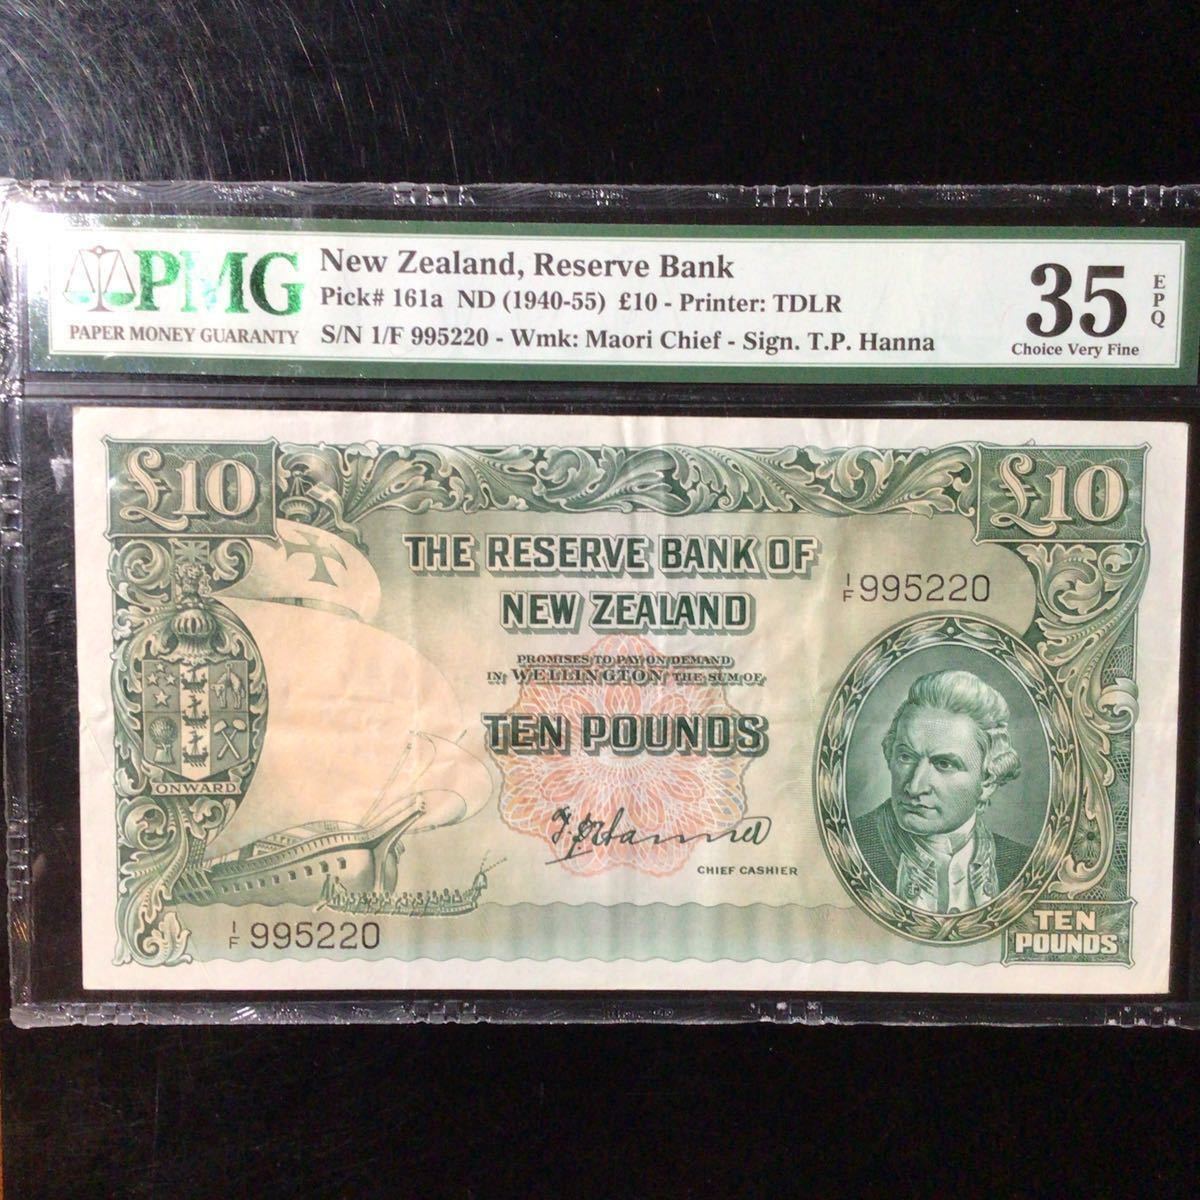 World Banknote Grading NEW ZEALAND《Reserve Bank of New Zealand》10 Pounds【1940-55】『PMG Grading Choice Very Fine 35 EPQ』